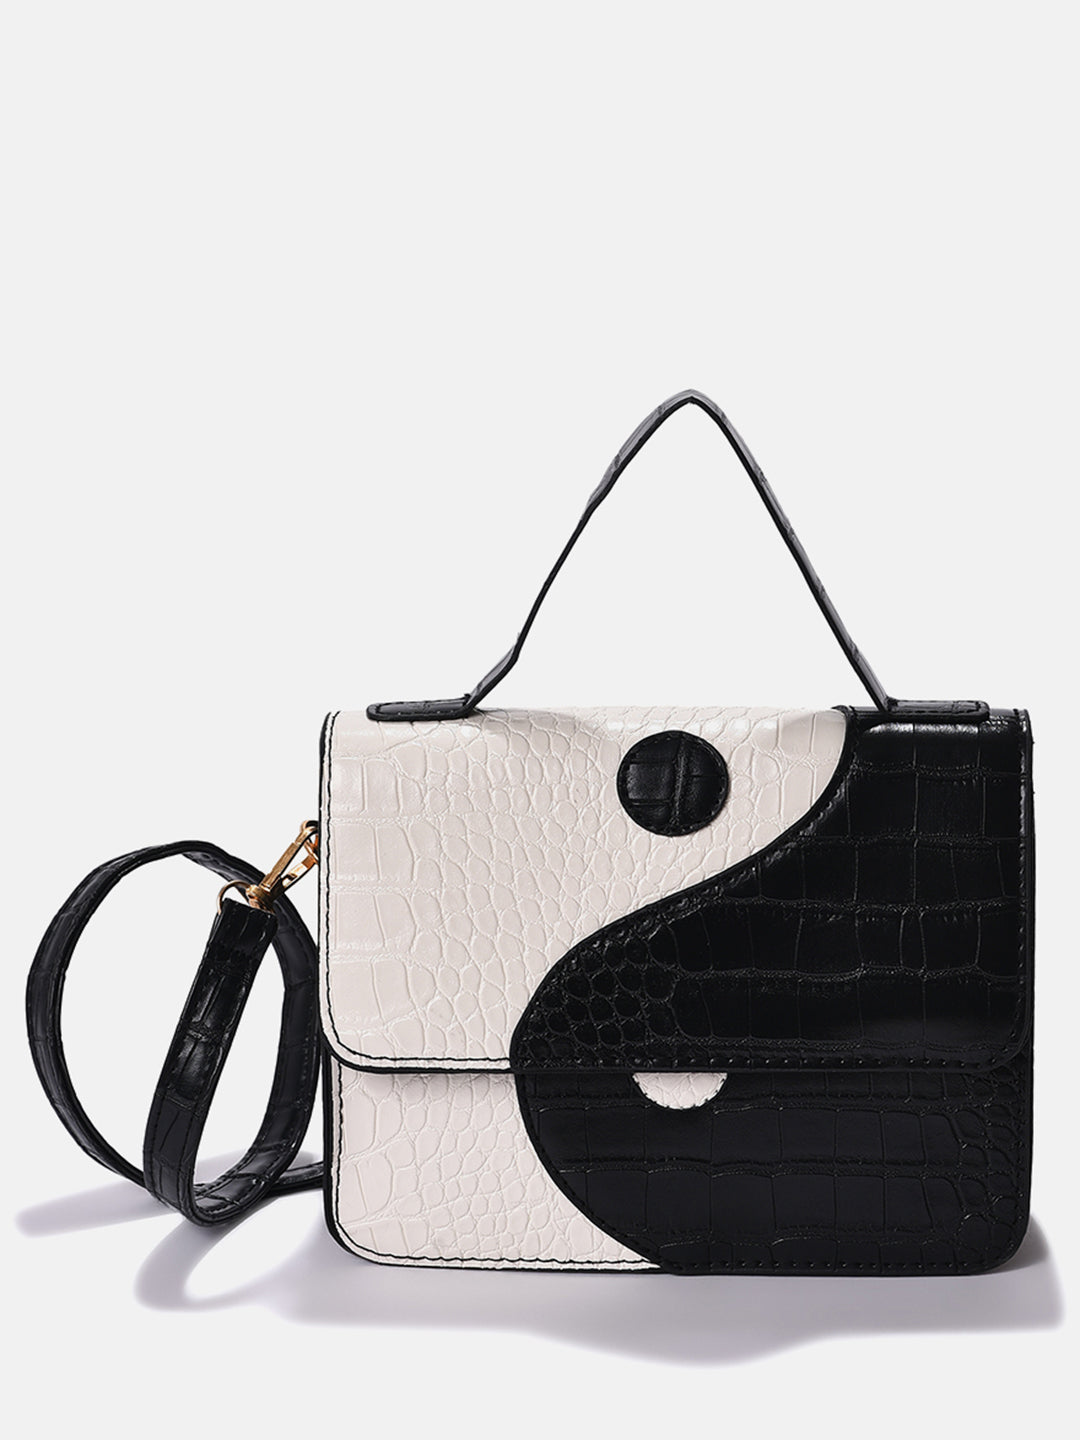 Yin Yang Black & White Mini Bag